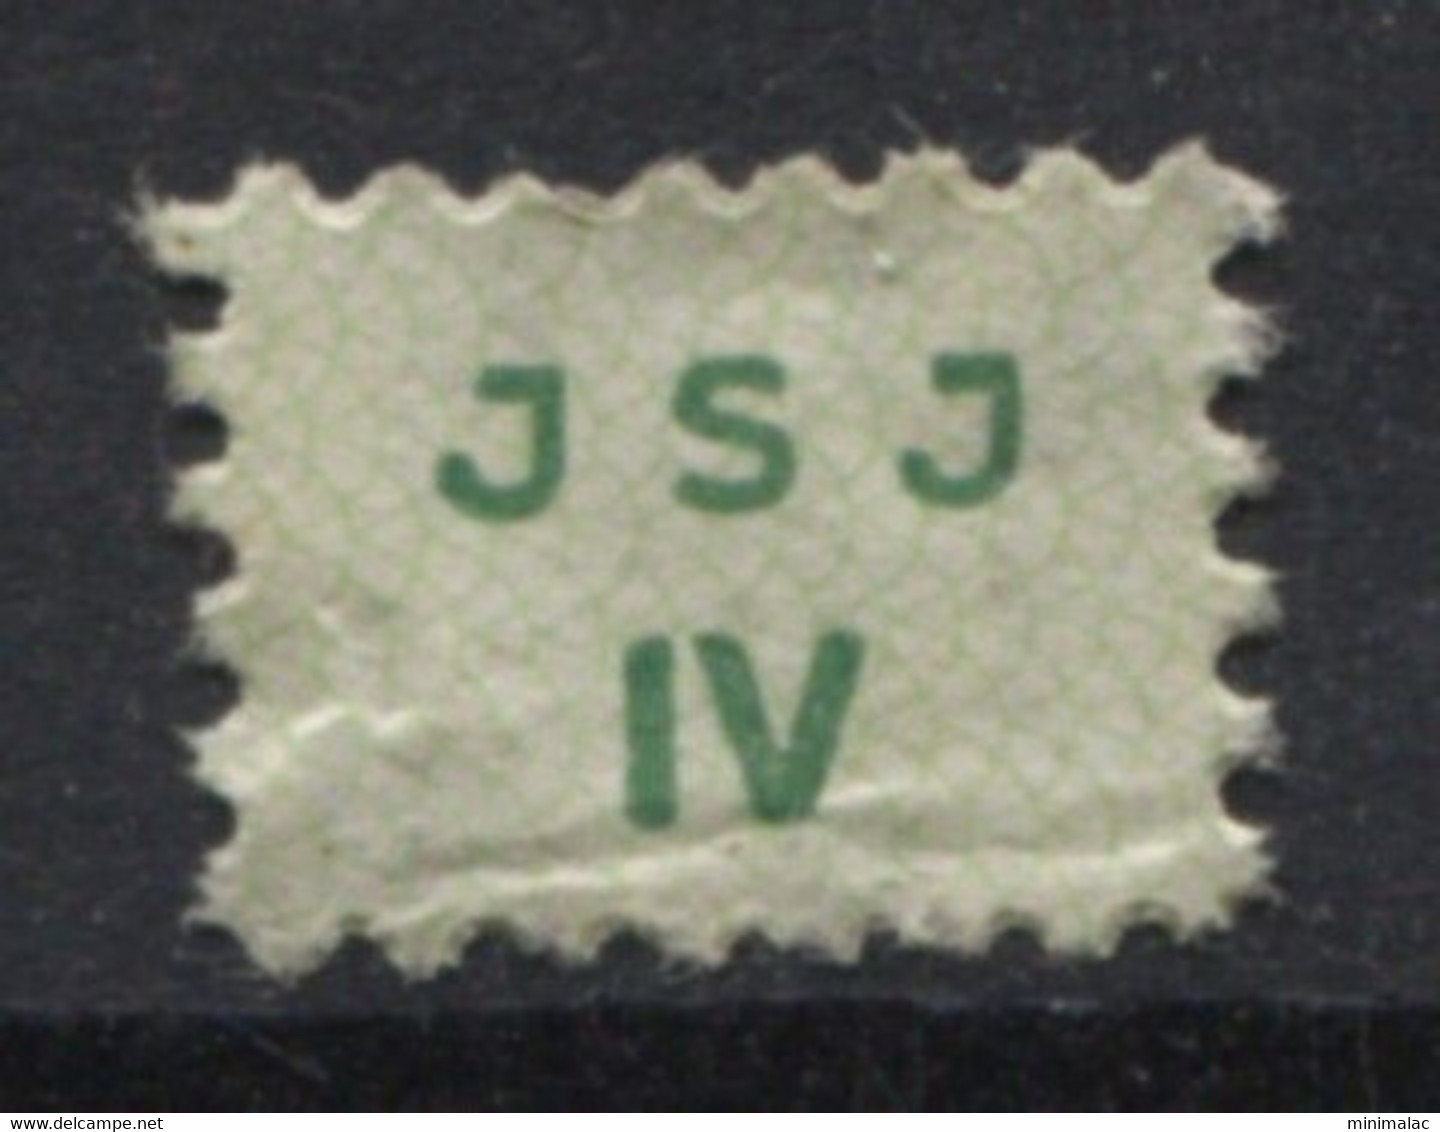 Yugoslavia 1948, Stamp For Membership, JSJ, Labor Union, Administrative Stamp - Revenue, Tax Stamp, IV - Servizio